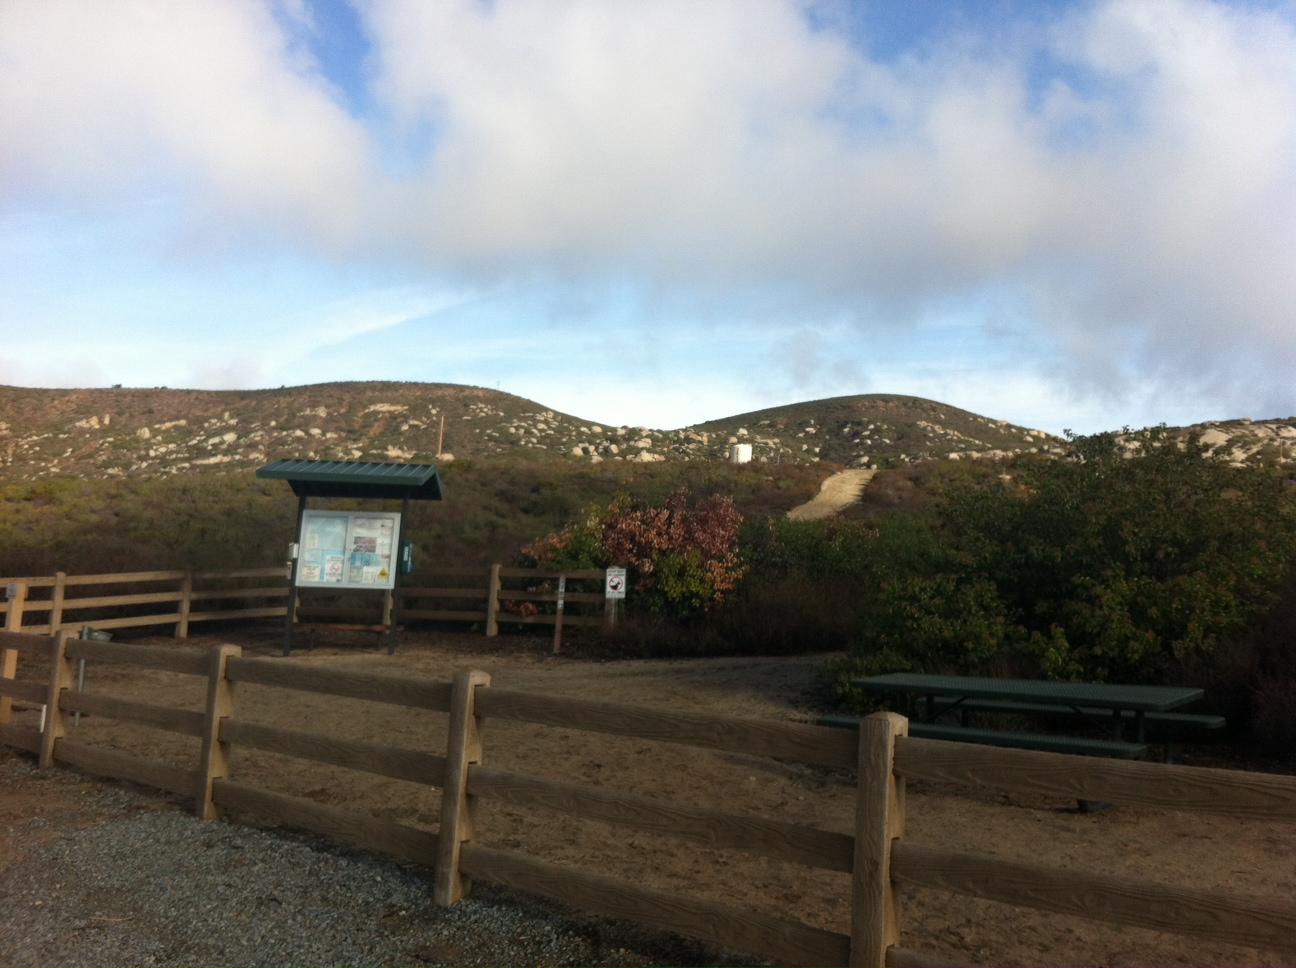 Hike it! @ Mt. Gower Open Space Preserve, Ramona, California…..November 2012